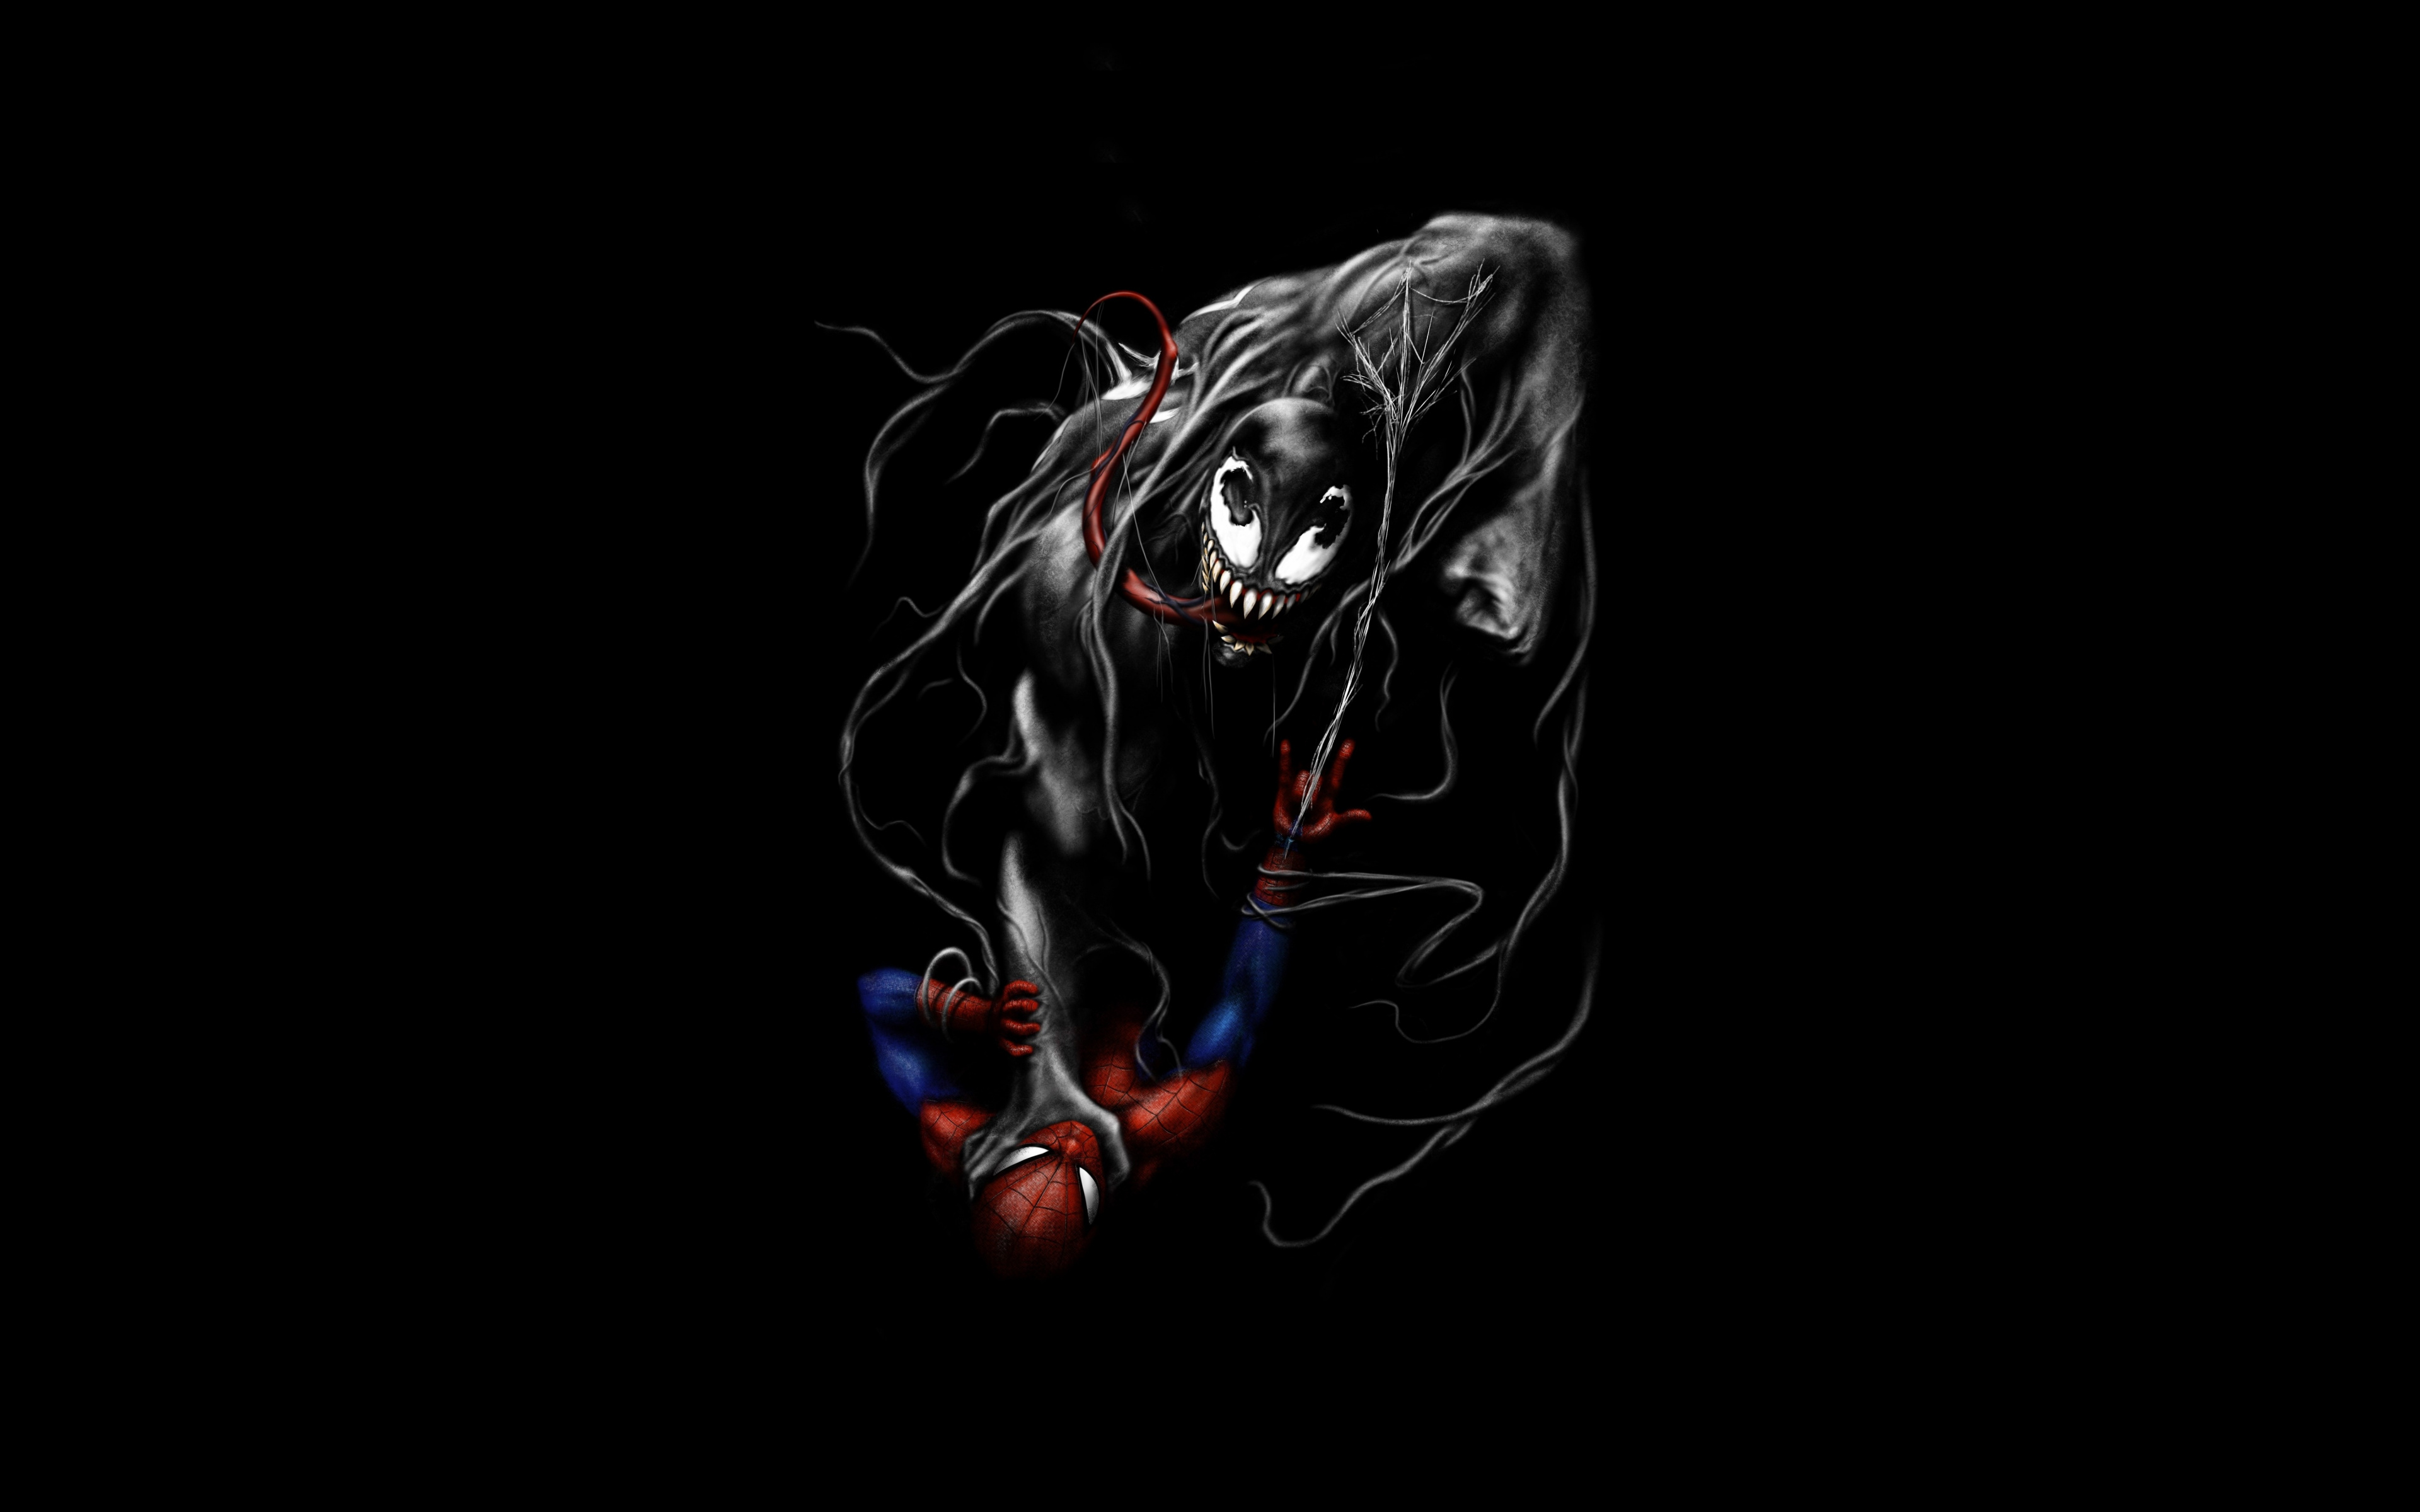 Download 3840x2400 wallpaper venom and spider man fight black